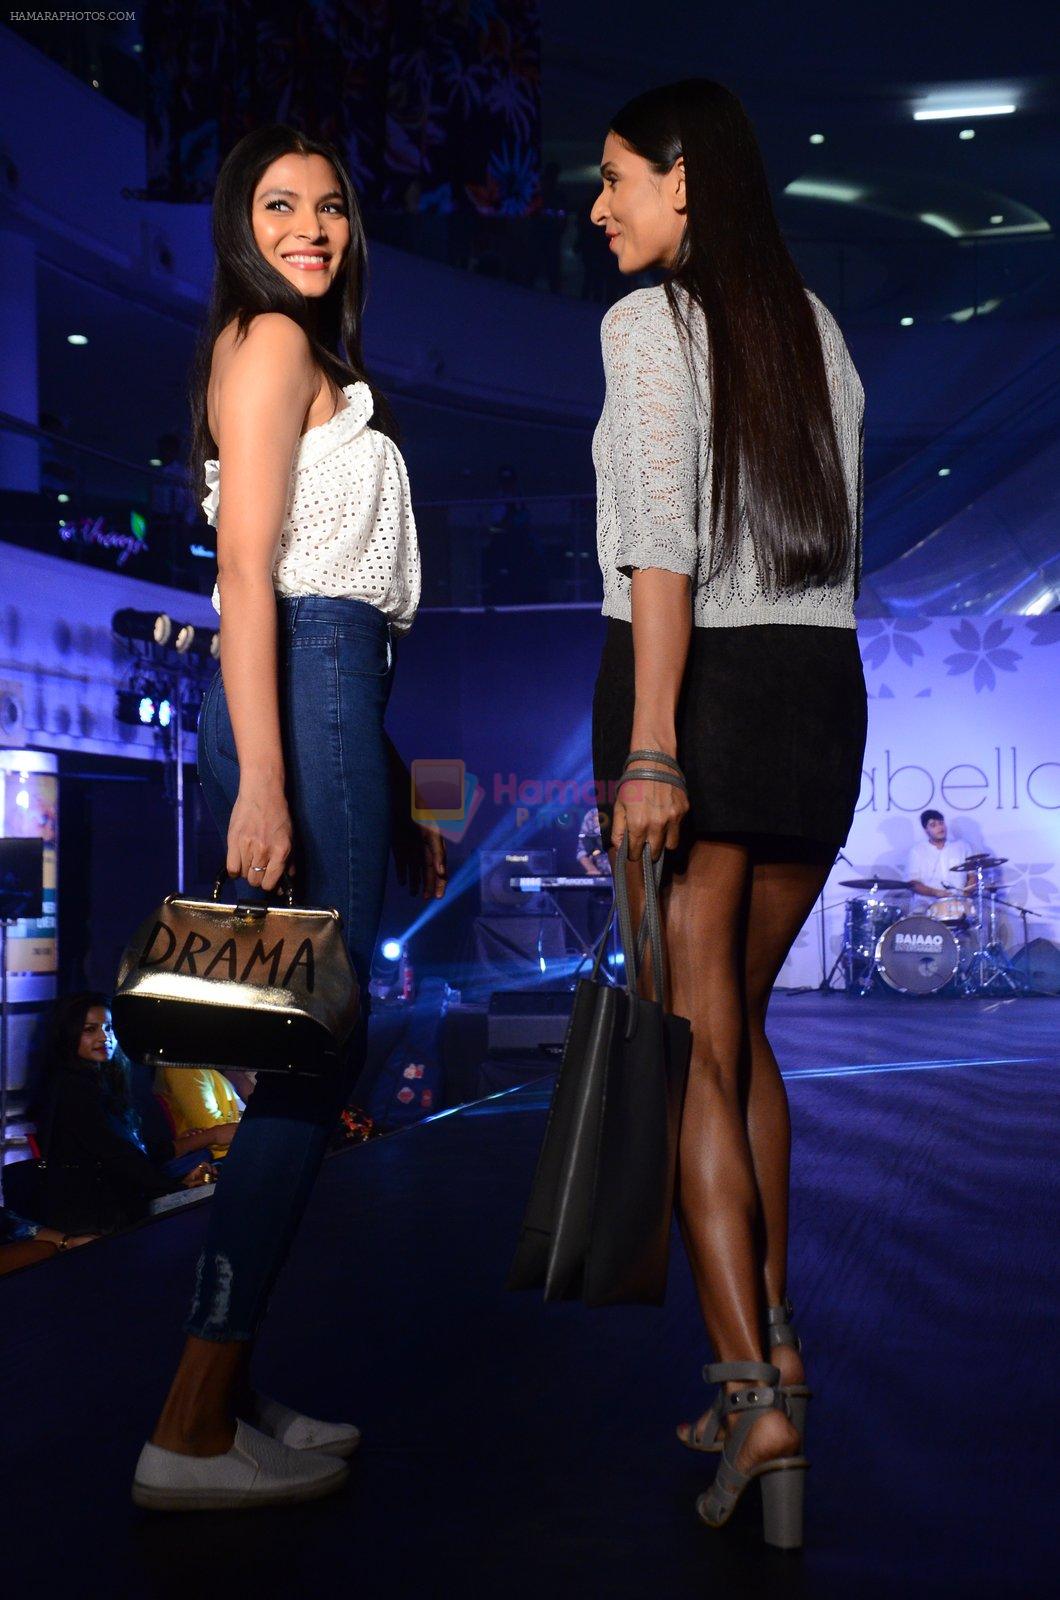 Model walks for Arabella label Fashion Show in Mumbai on 19th Feb 2016